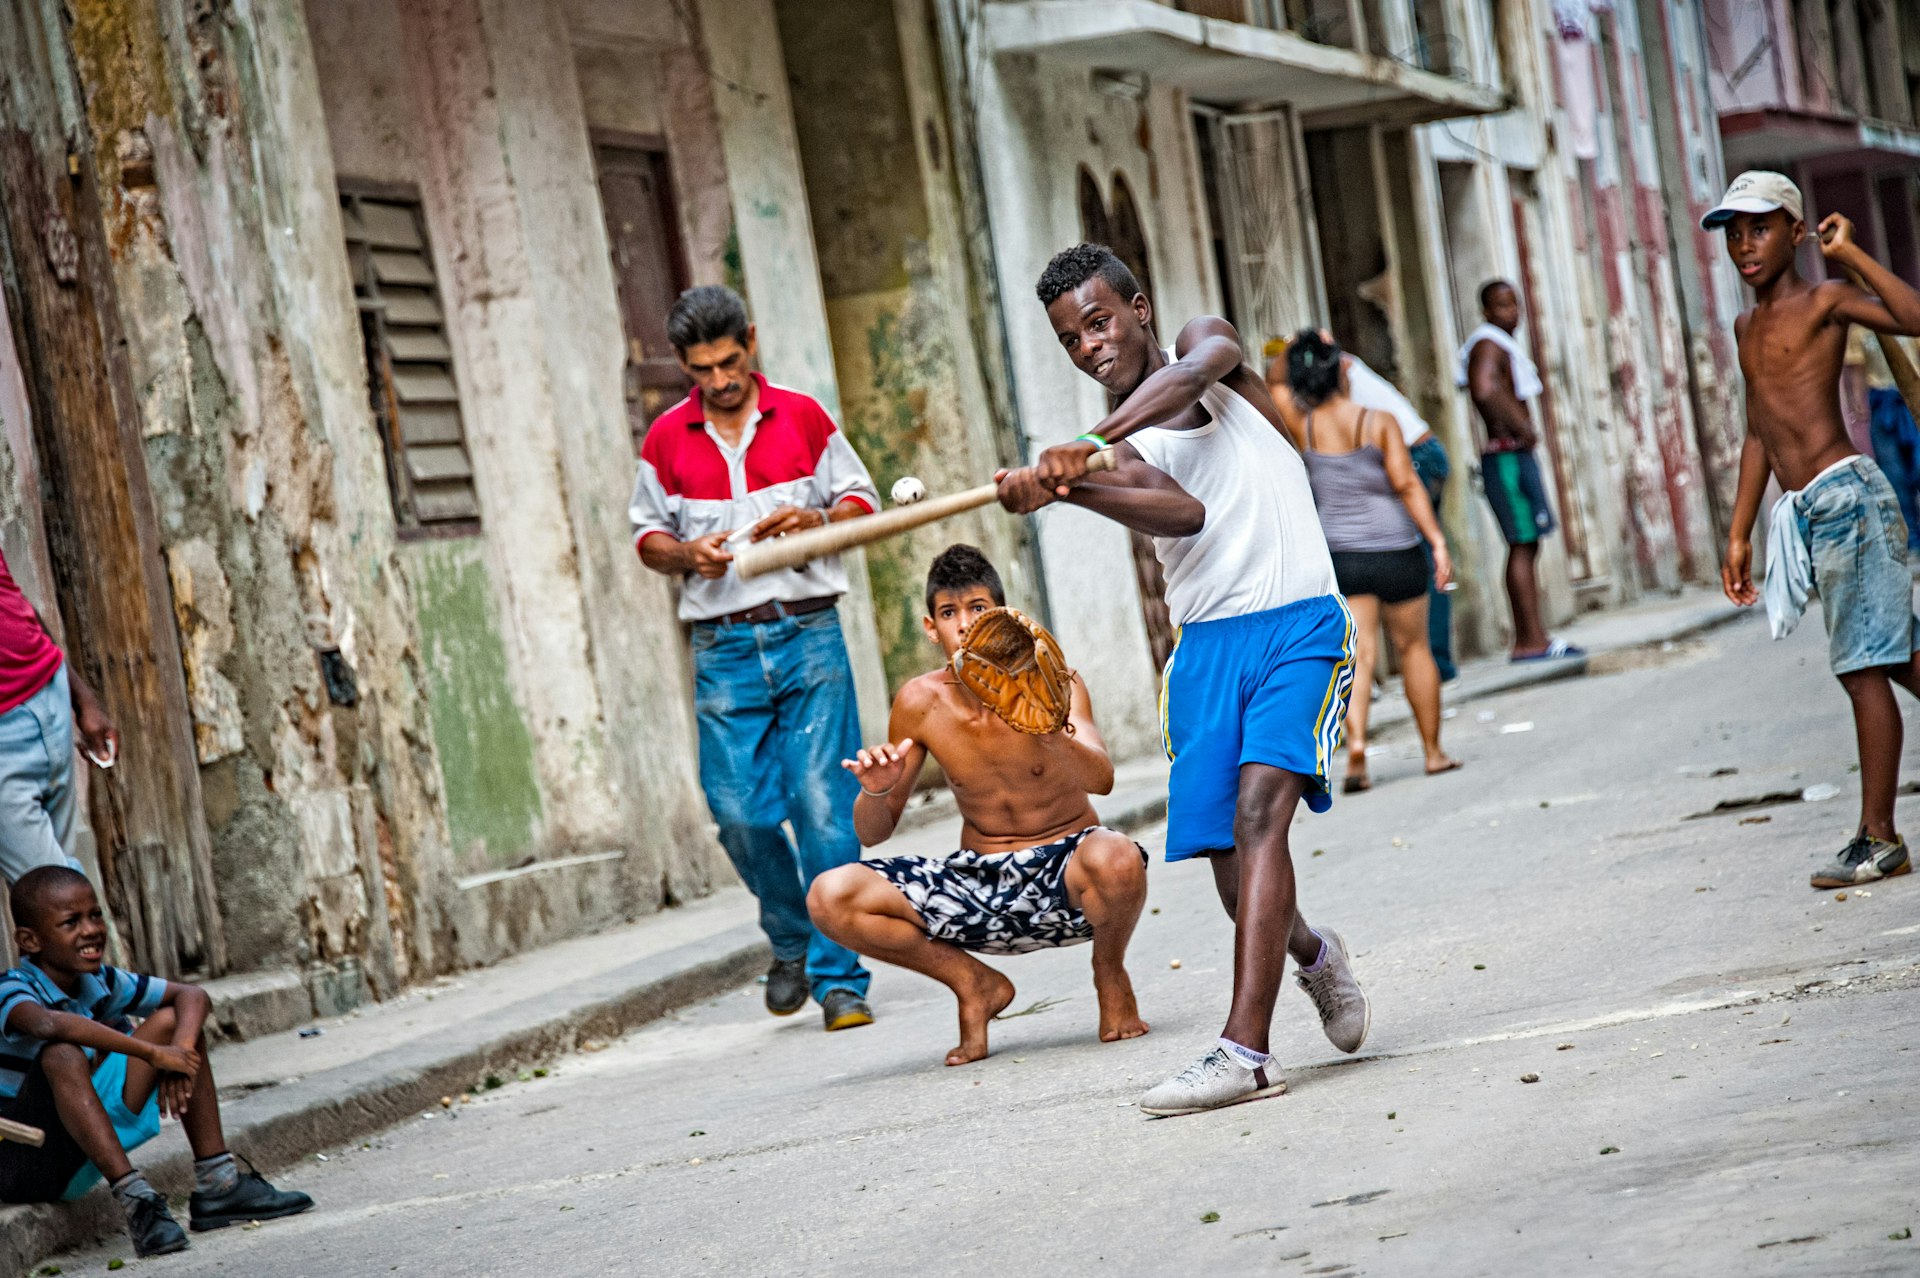 A group of kids play baseball in an alley of Havana, Cuba